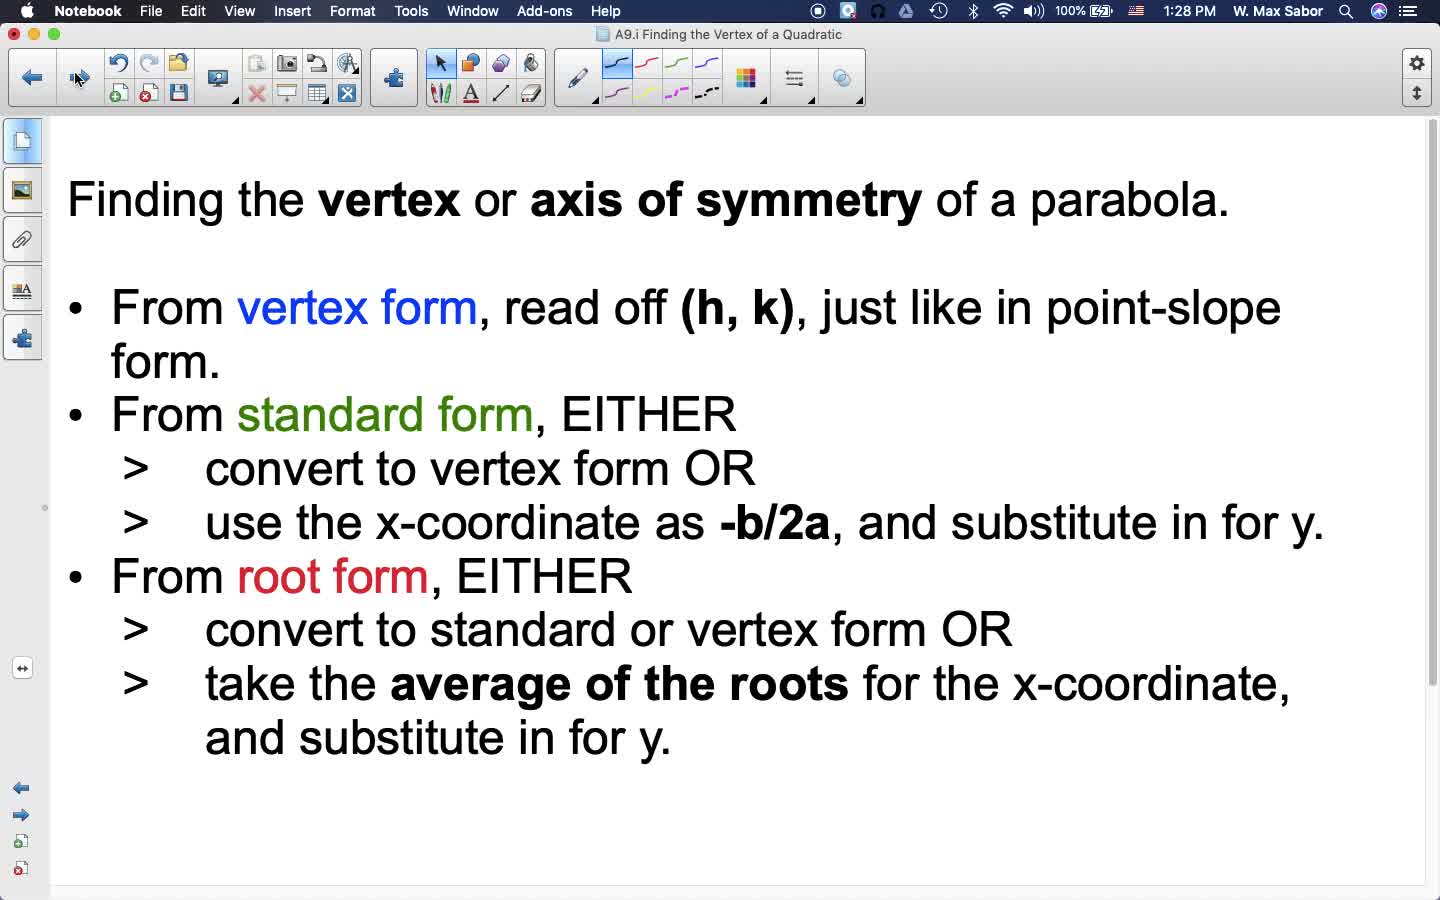 A9.i Finding the Vertex of a Quadratic